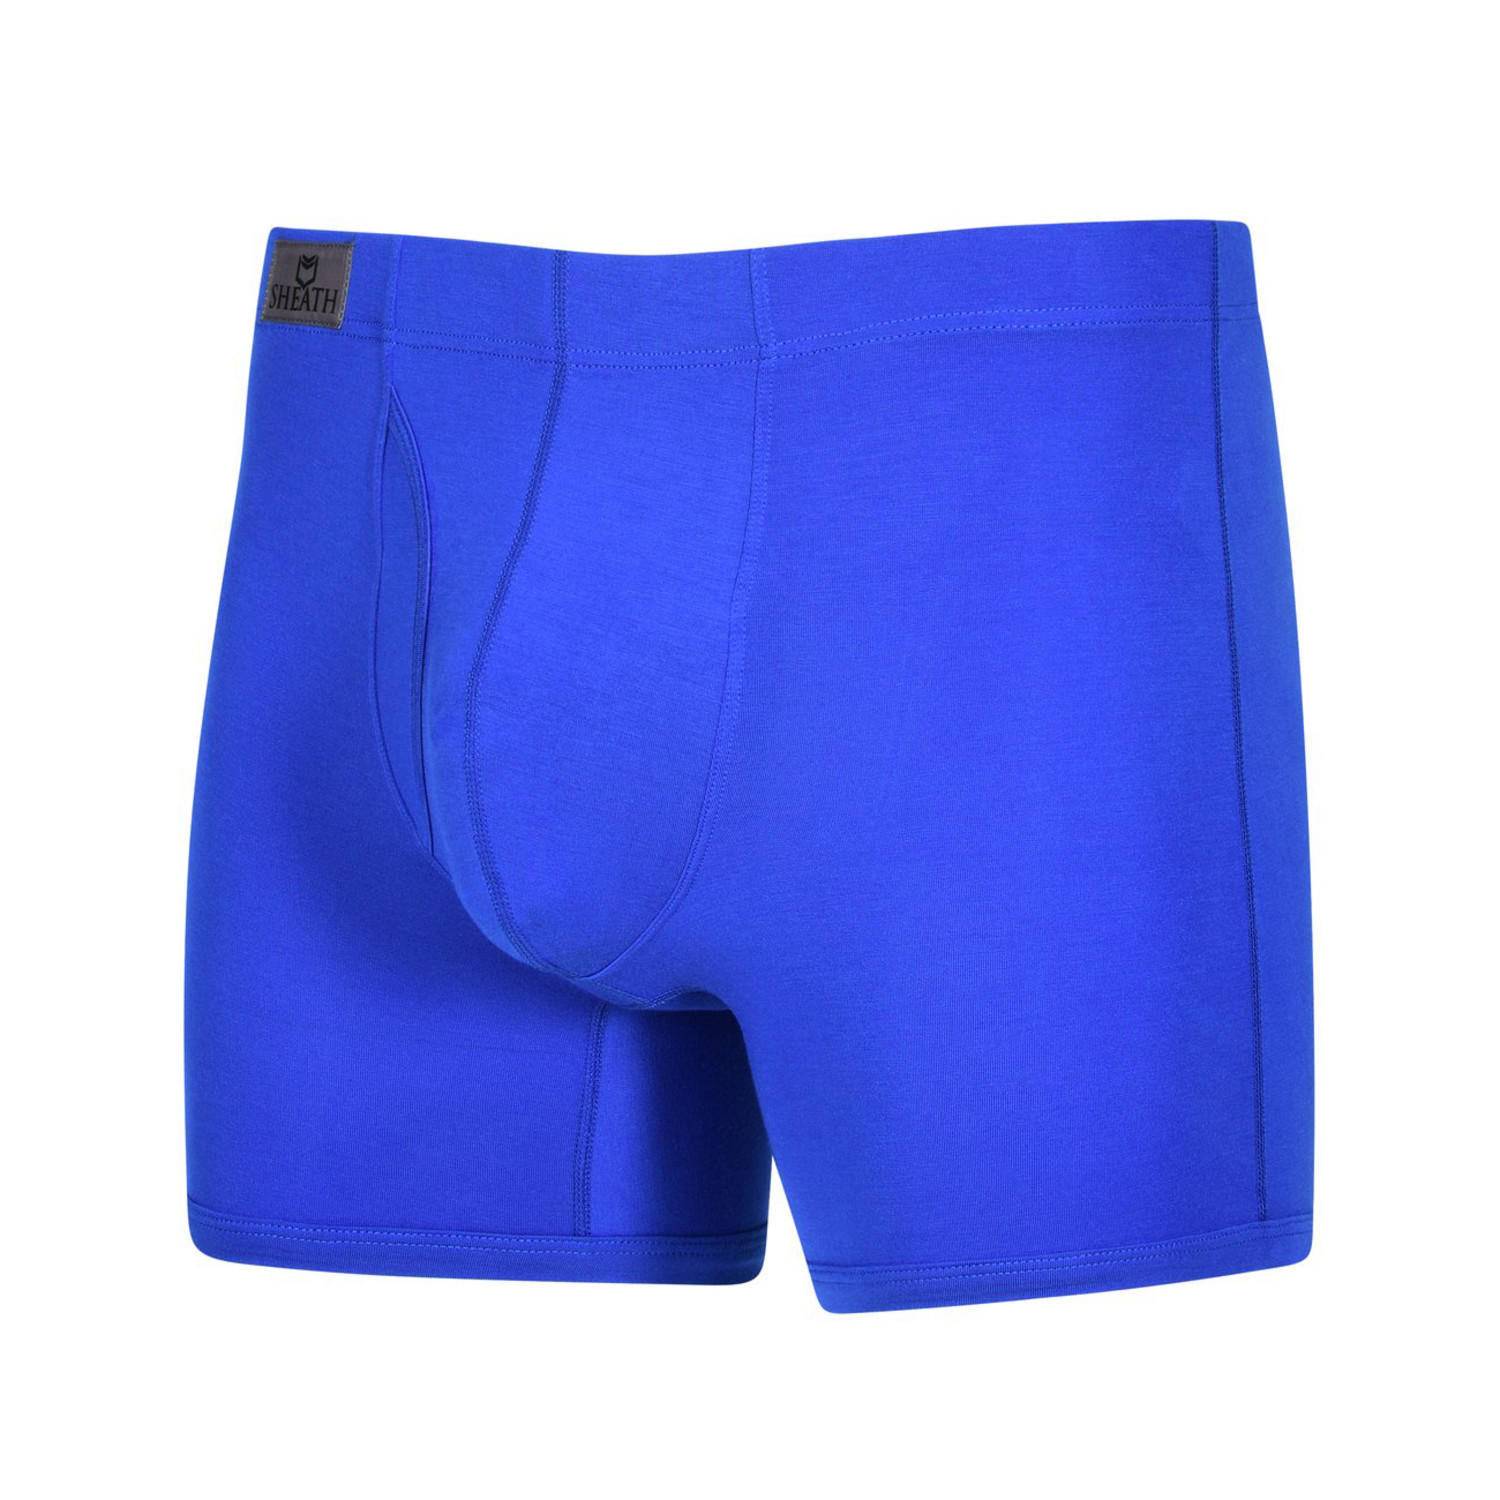 SHEATH 3.21 Men's Dual Pouch Boxer Brief // Navy (S) - Sheath Underwear ...